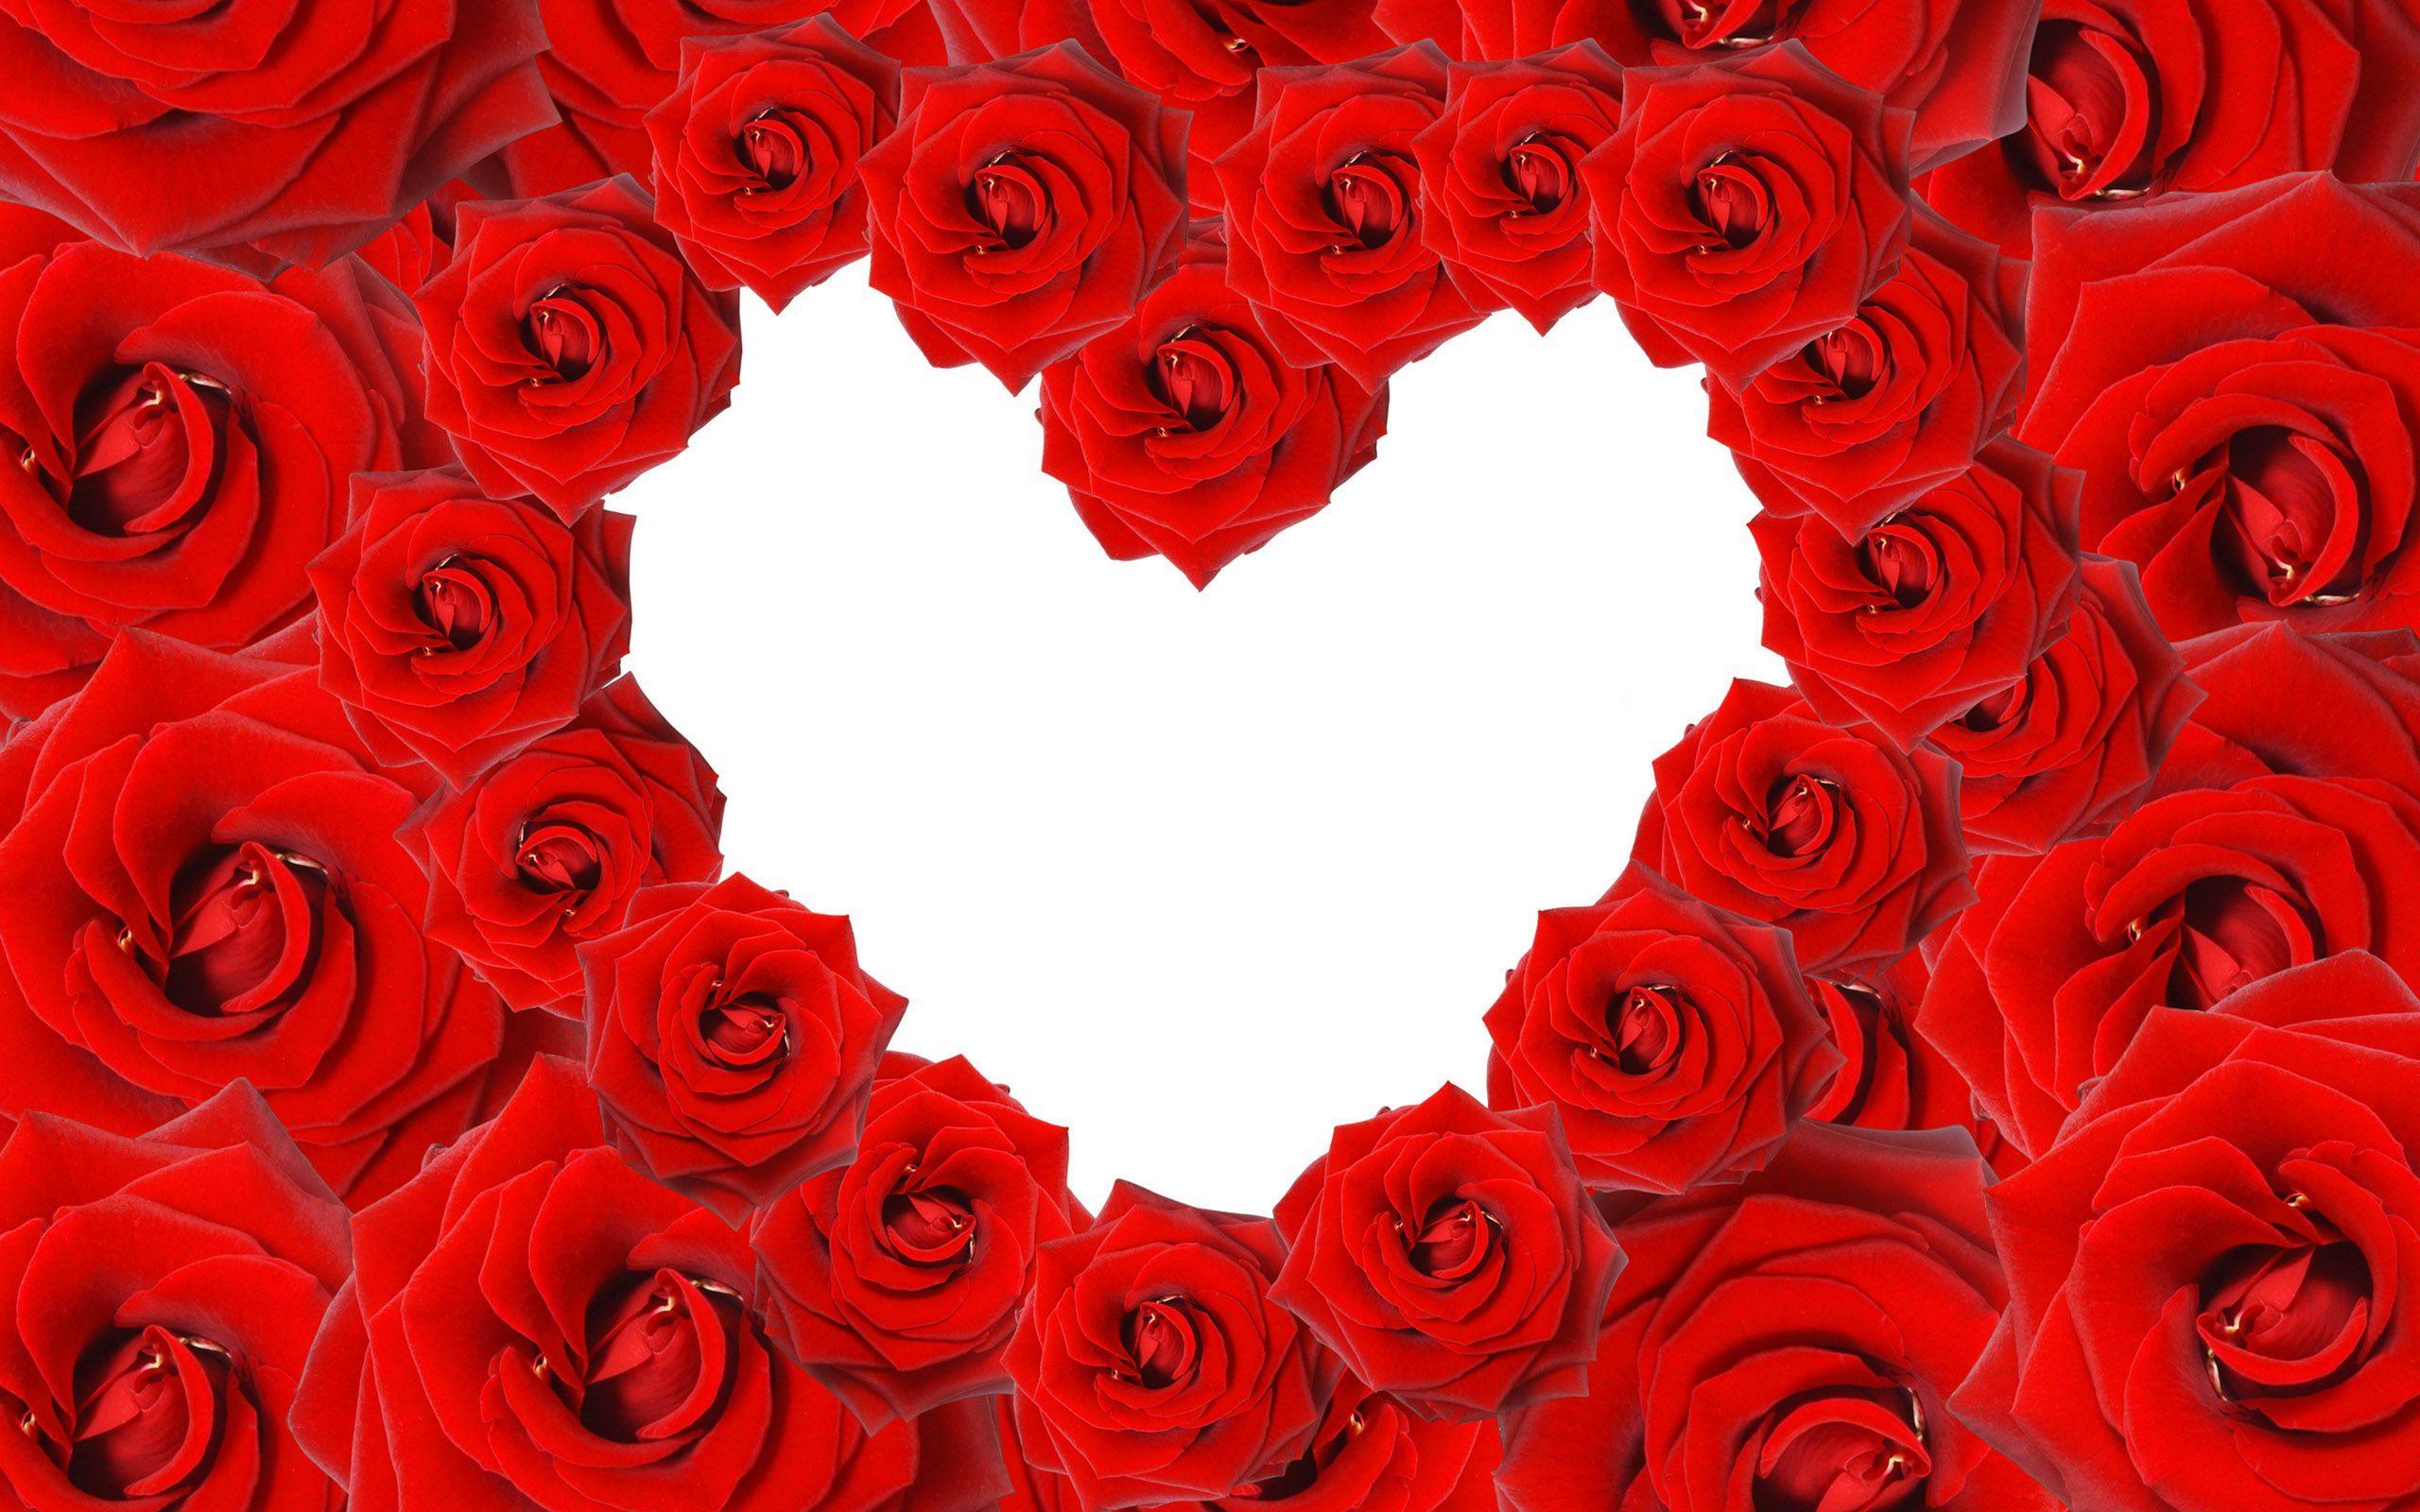 knumathise: Red Rose Heart Wallpaper Image